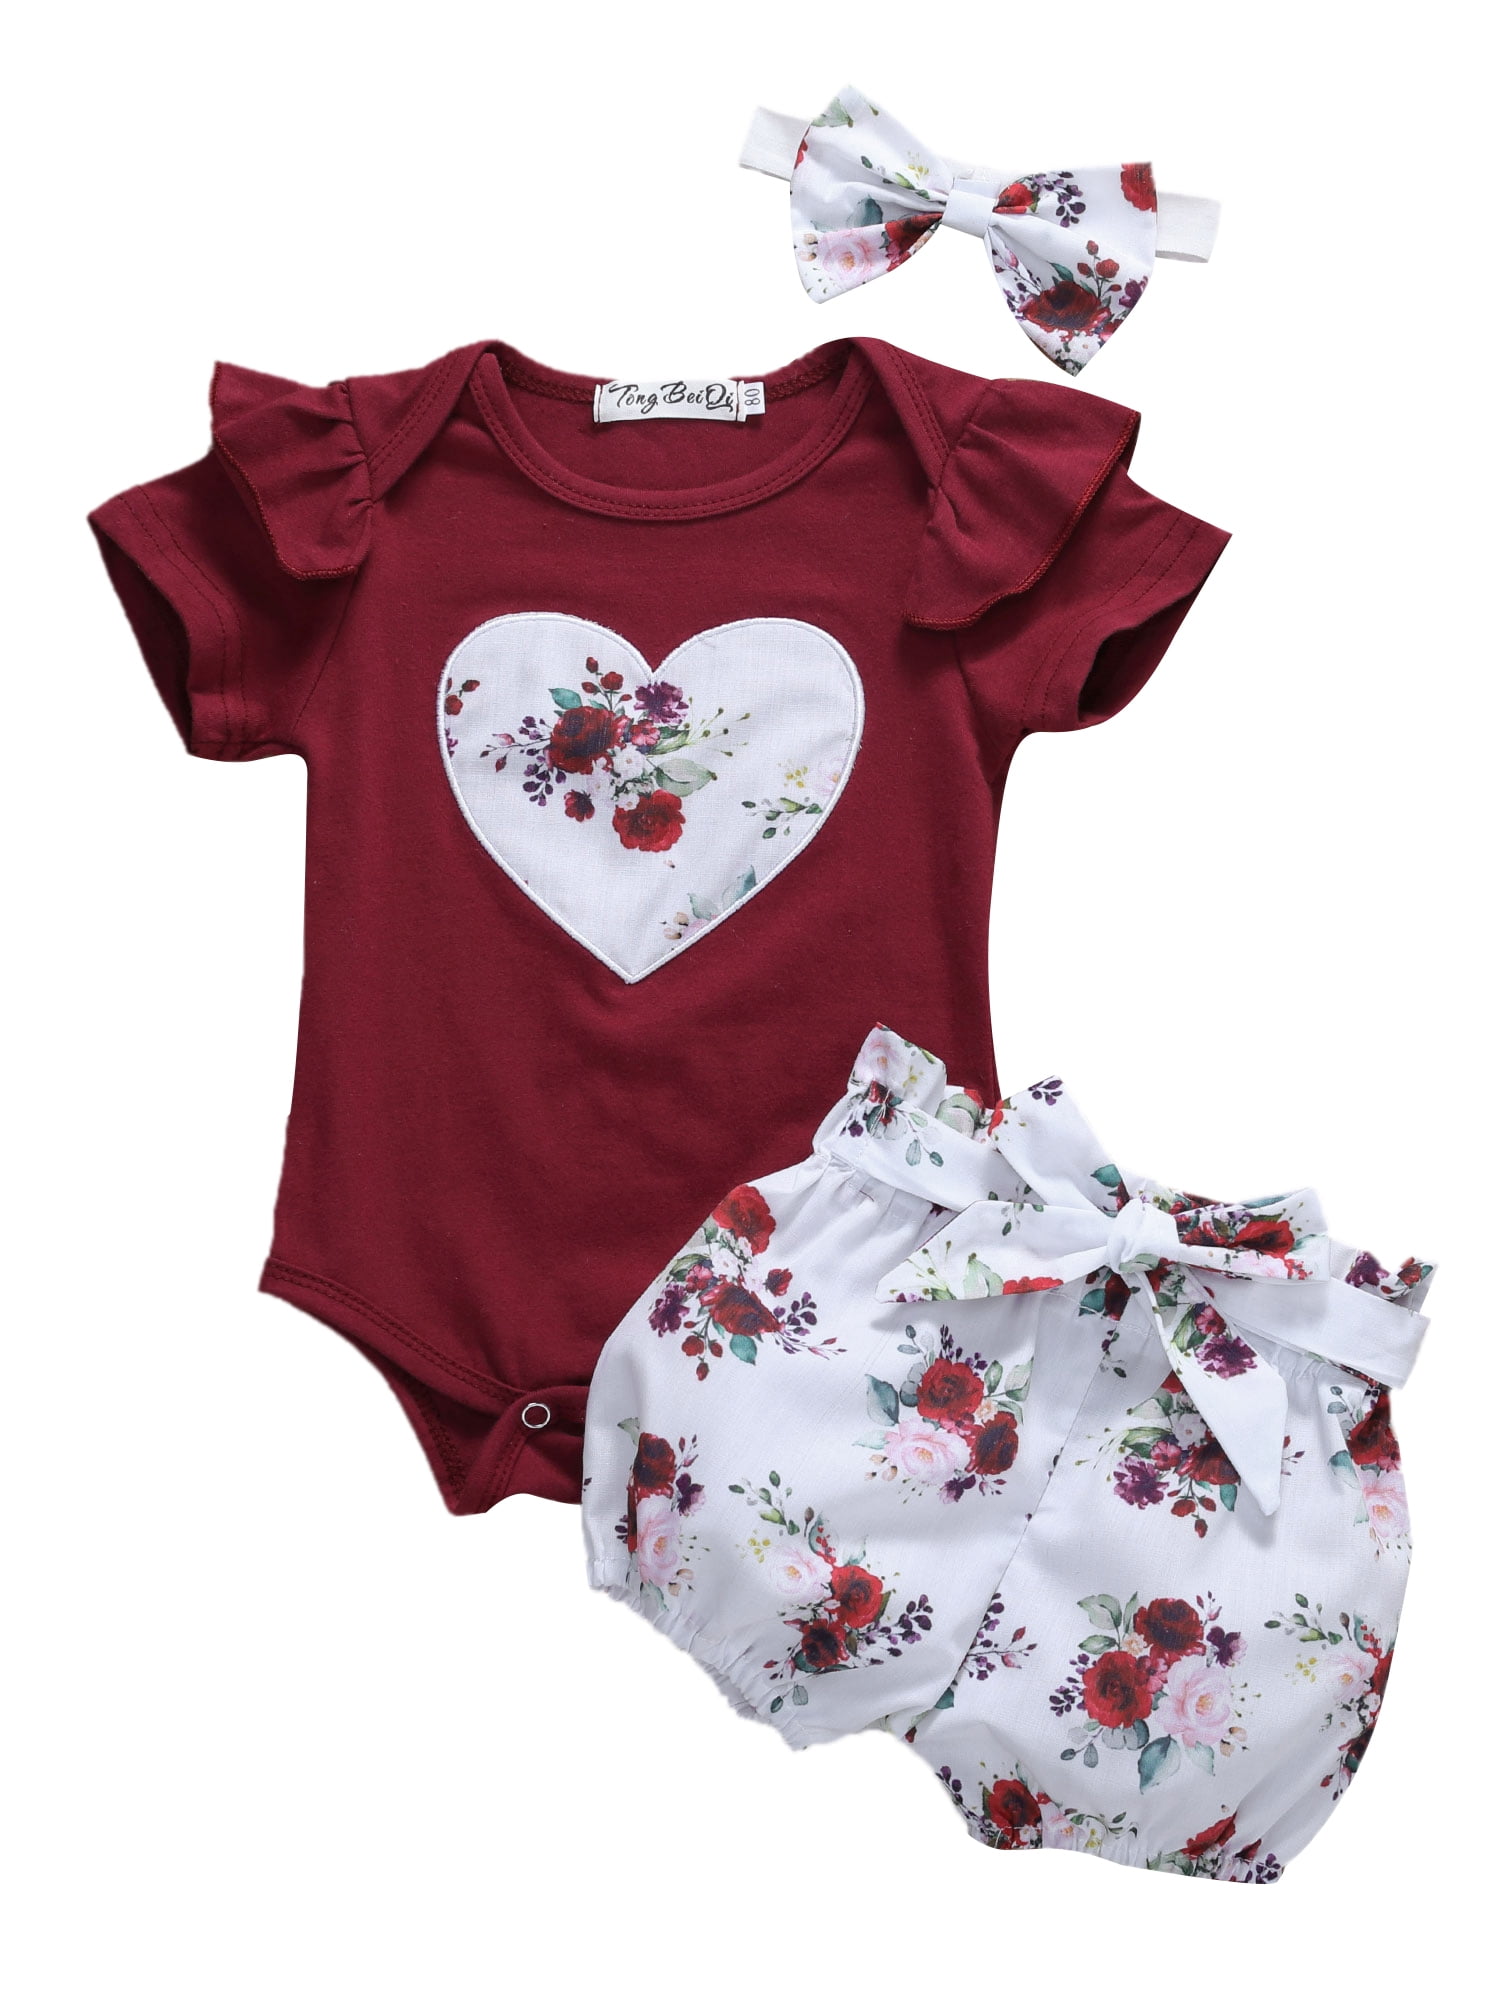 Newborn Baby Girls Outfits Clothes Romper Bodysuit+Flower Shorts+Headband Sets 